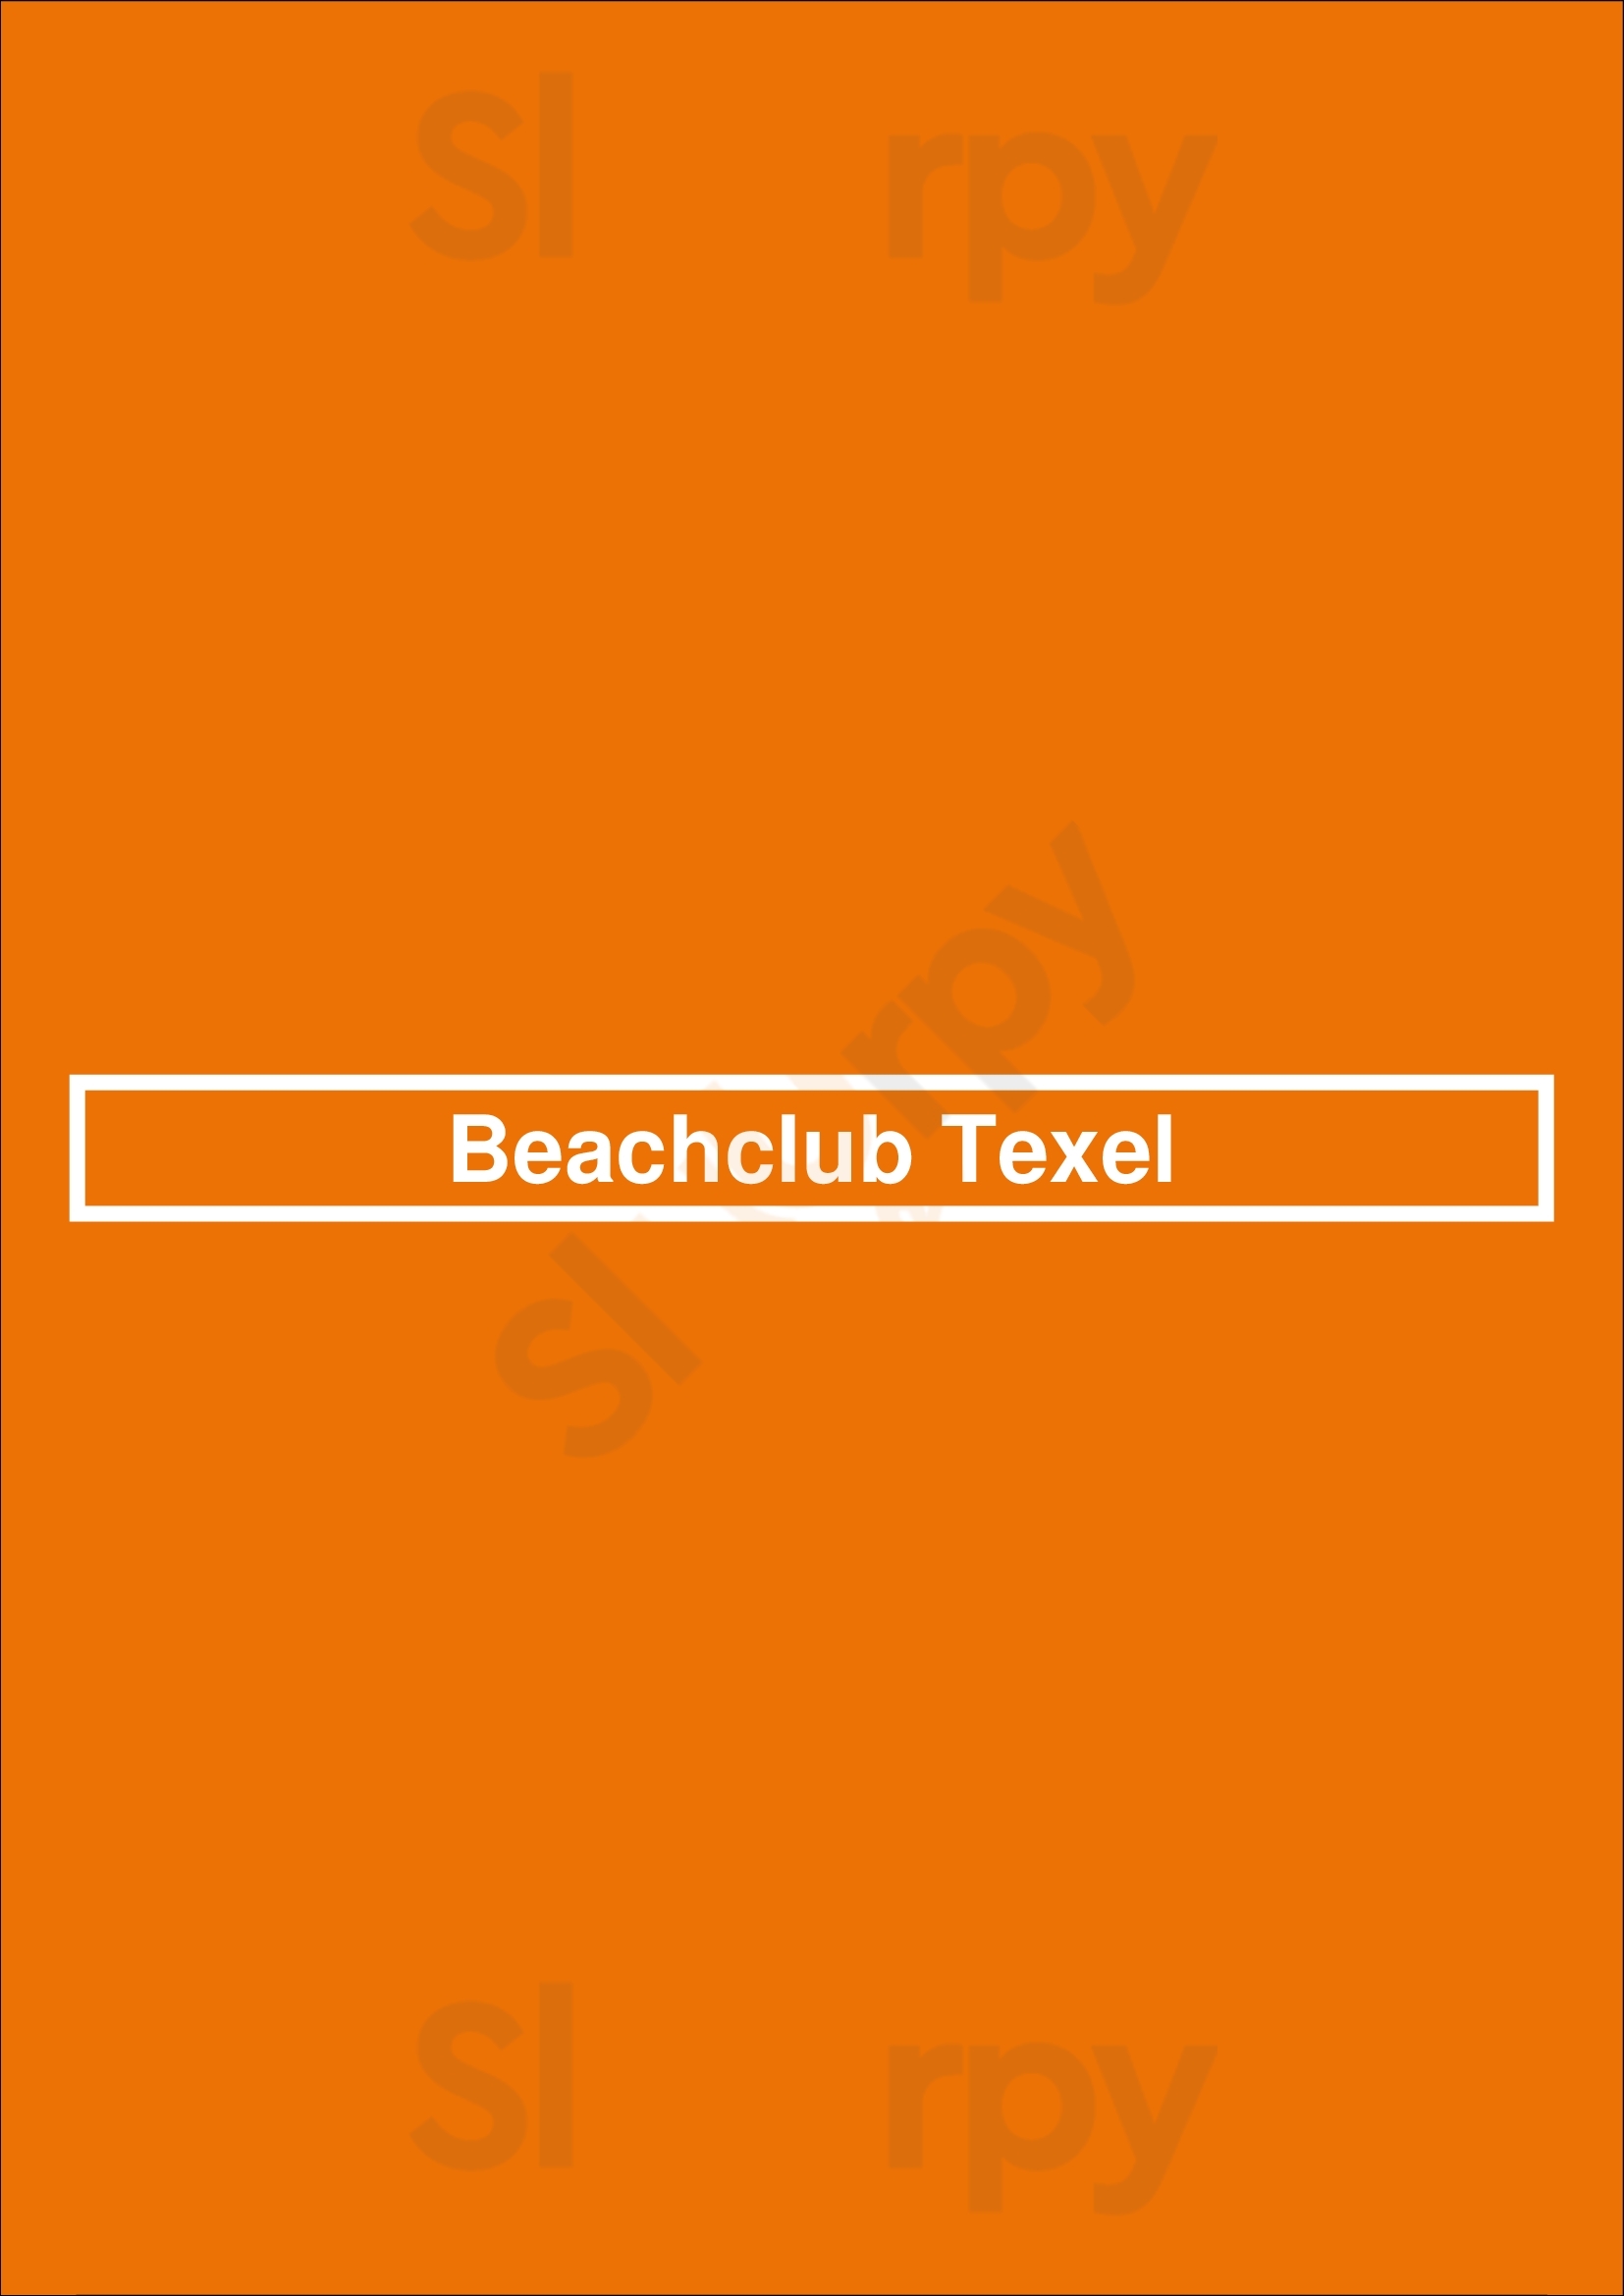 Beachclub Texel De Koog Menu - 1